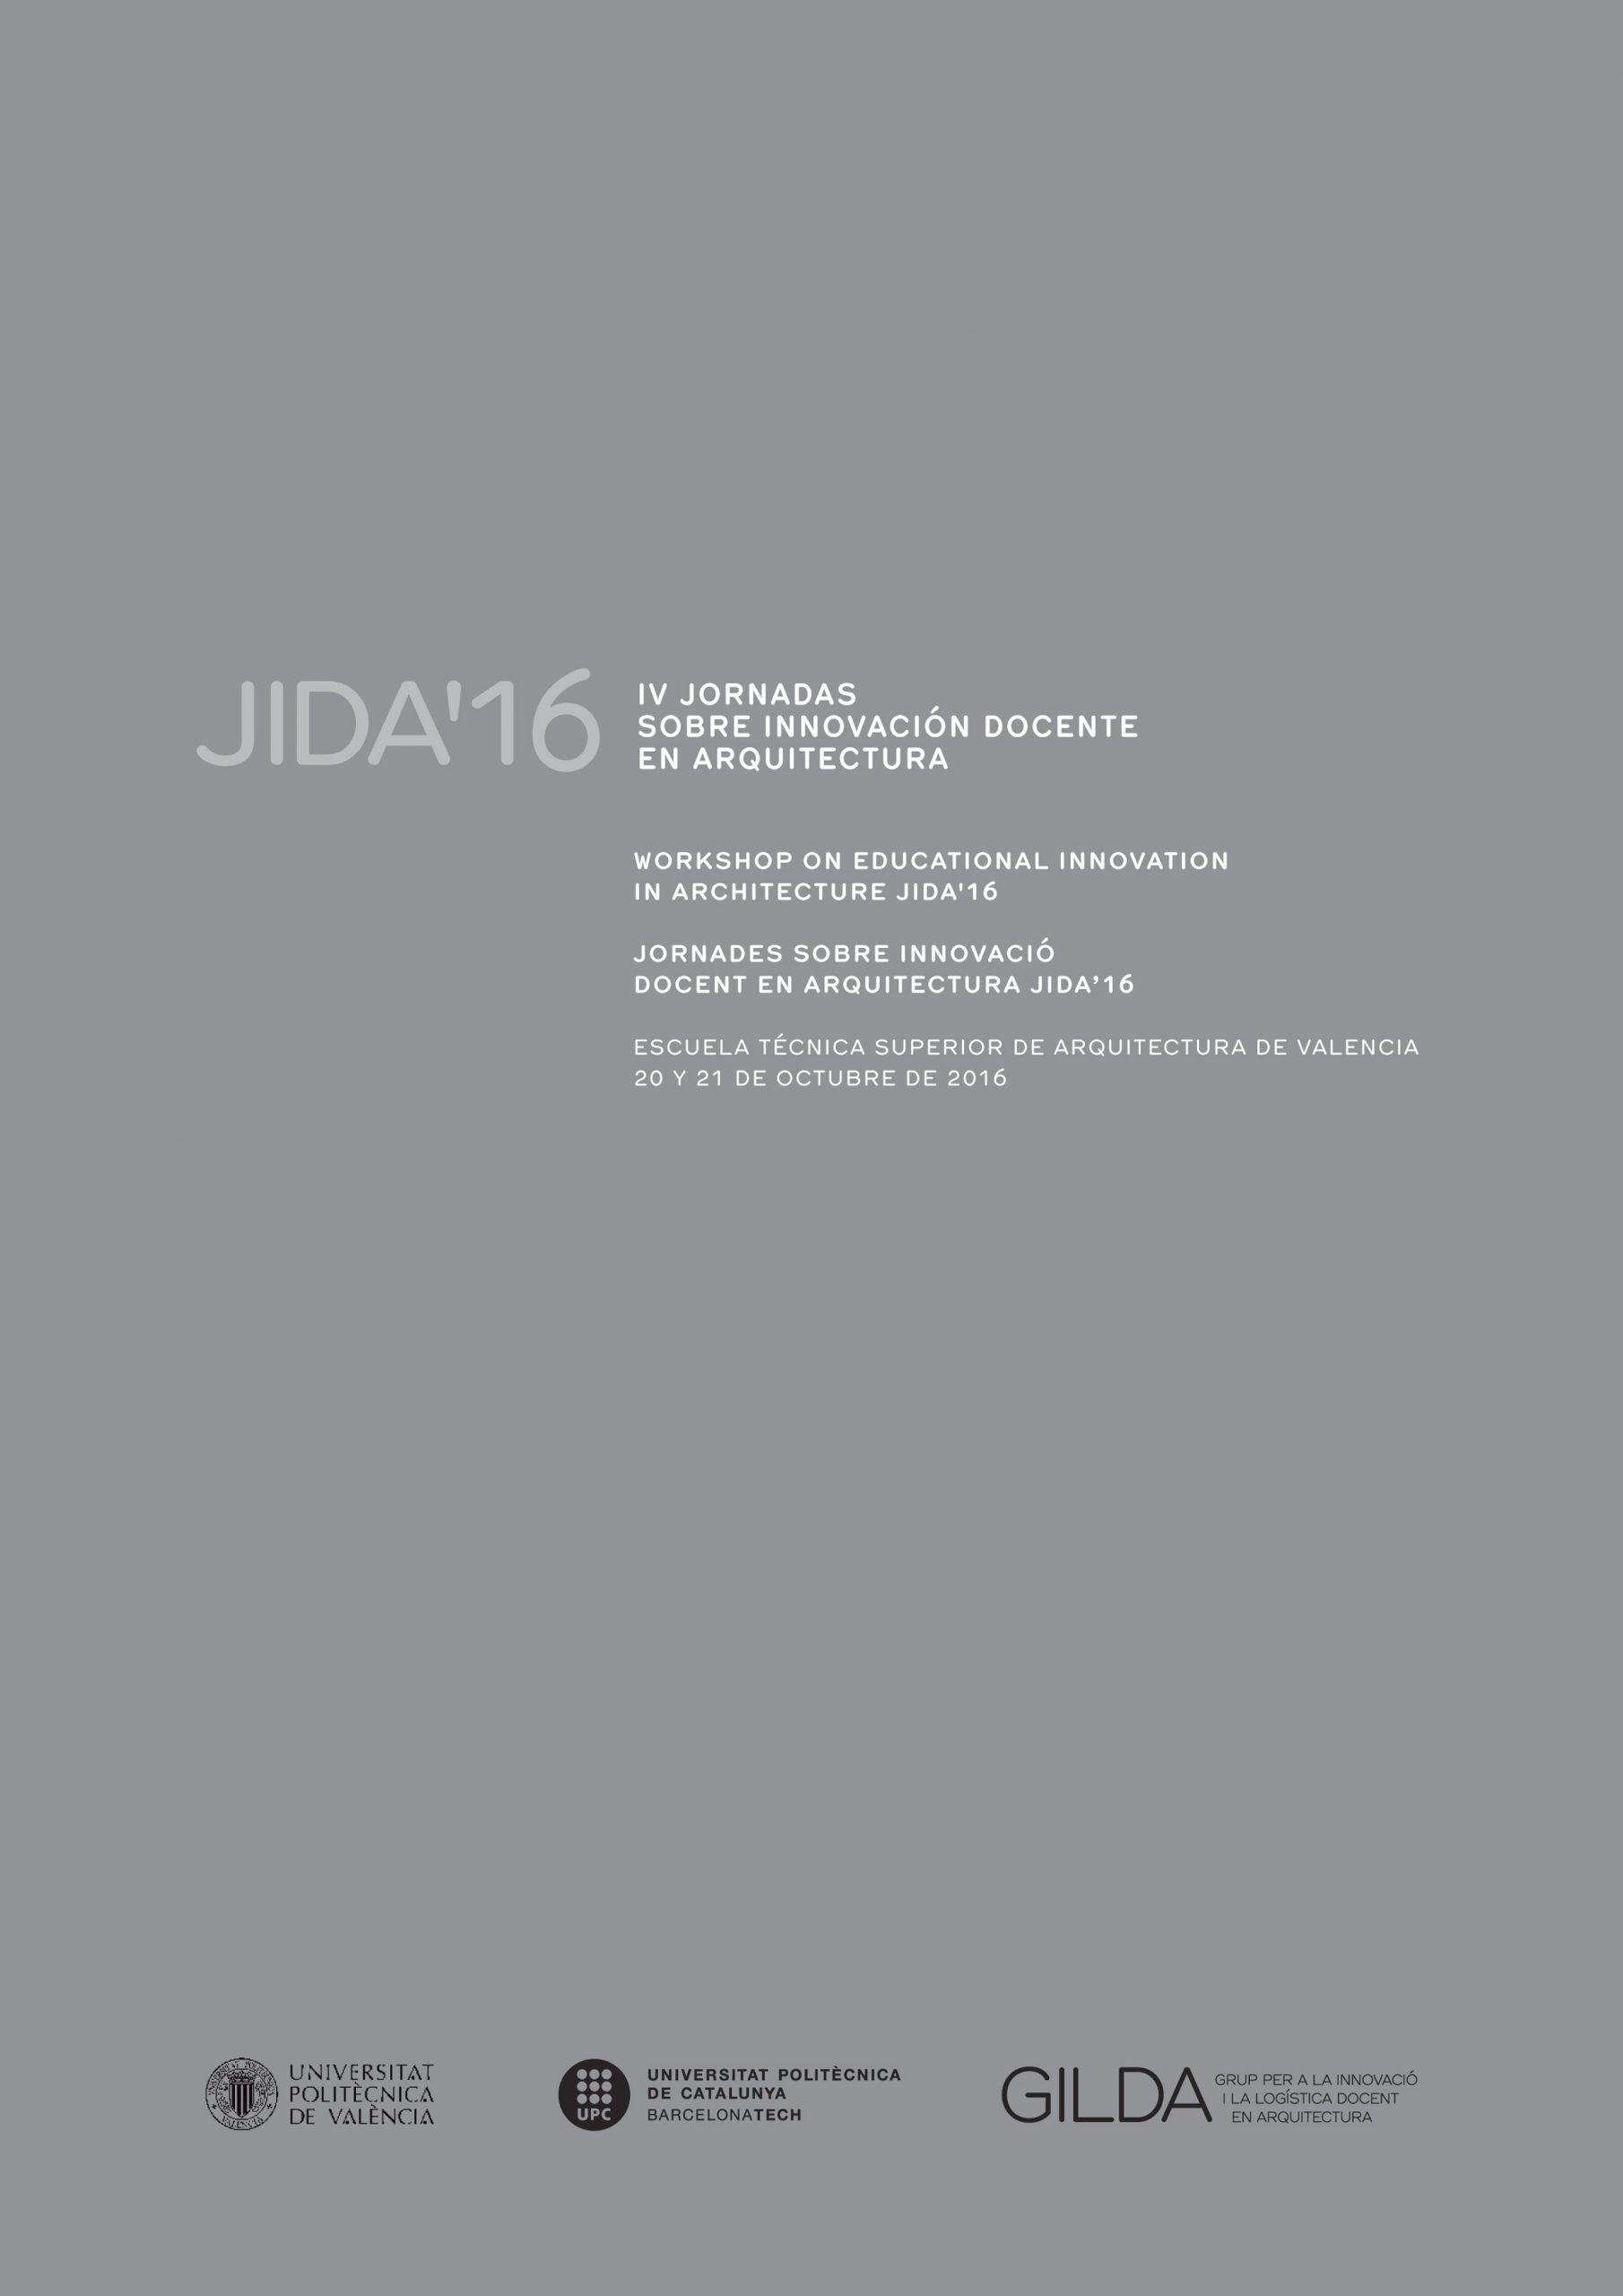 JIDA’16 IV Jornadas sobre innovación docente en arquitectura